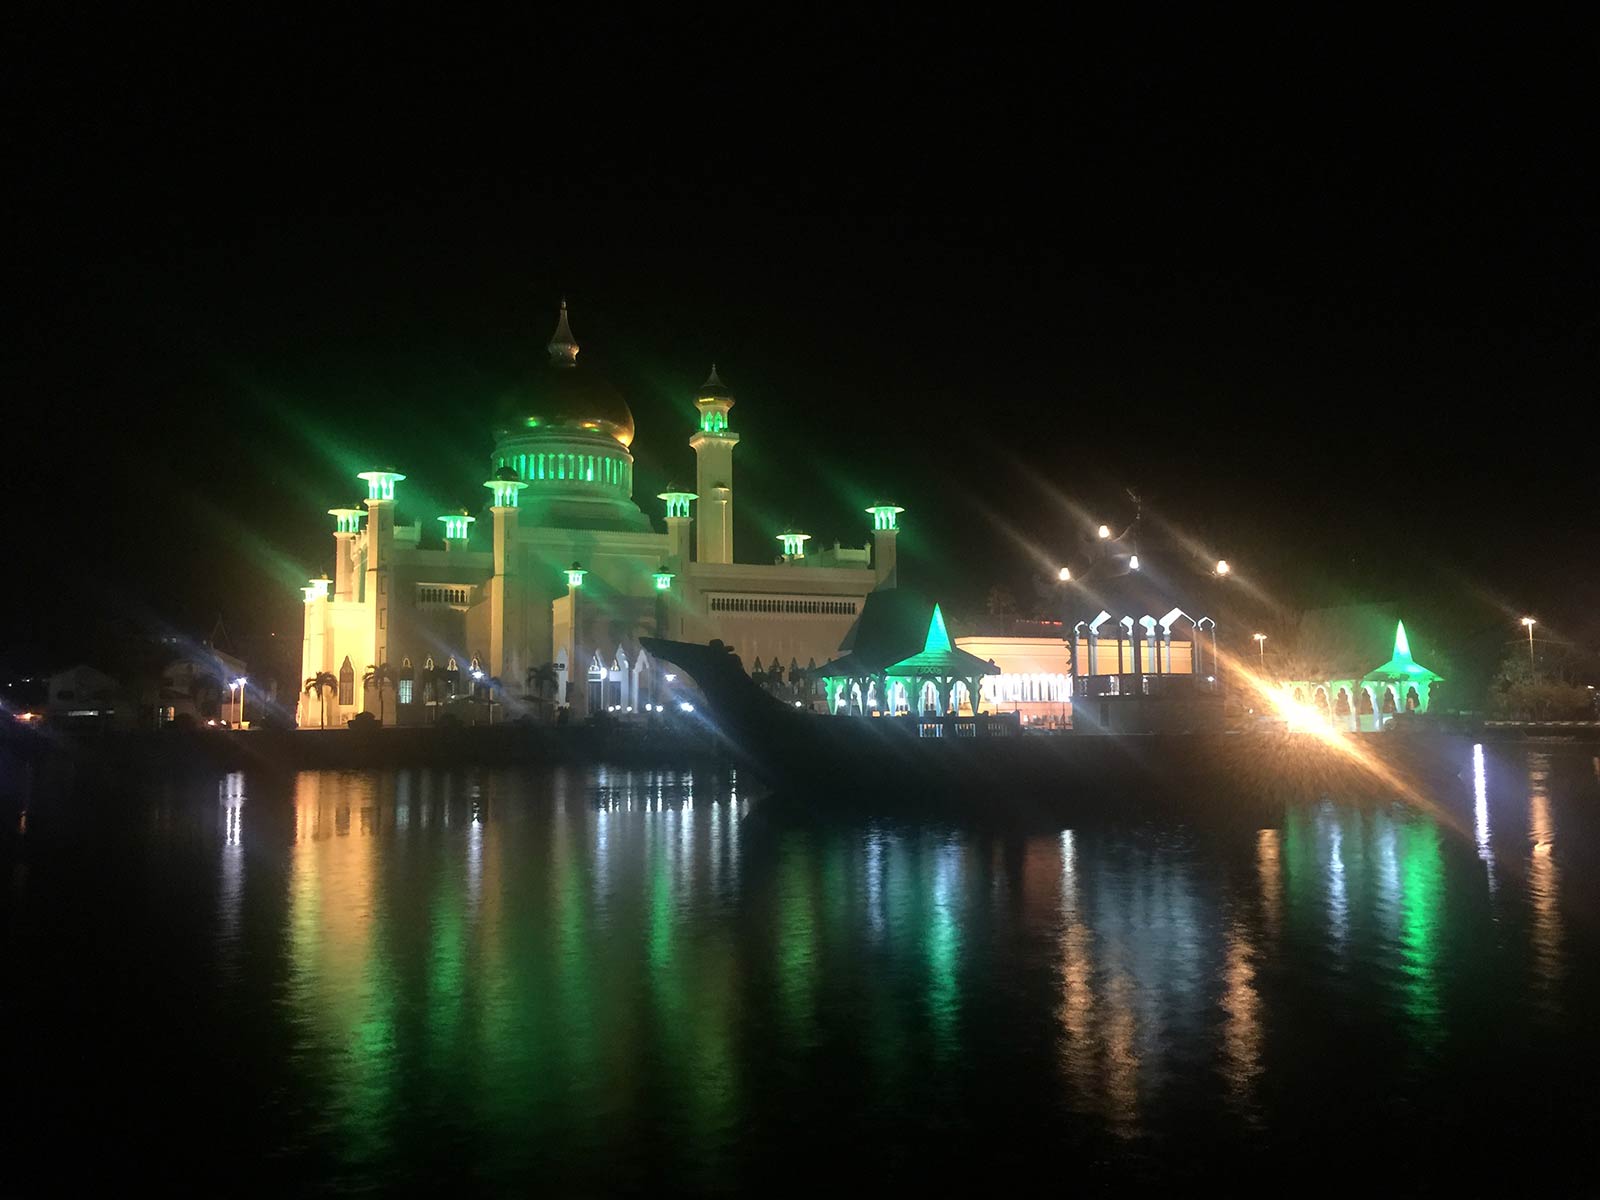 Elegant mosque Sultan Omar Ali Saifuddien at night in Brunei. Stunning mosque in Brunei